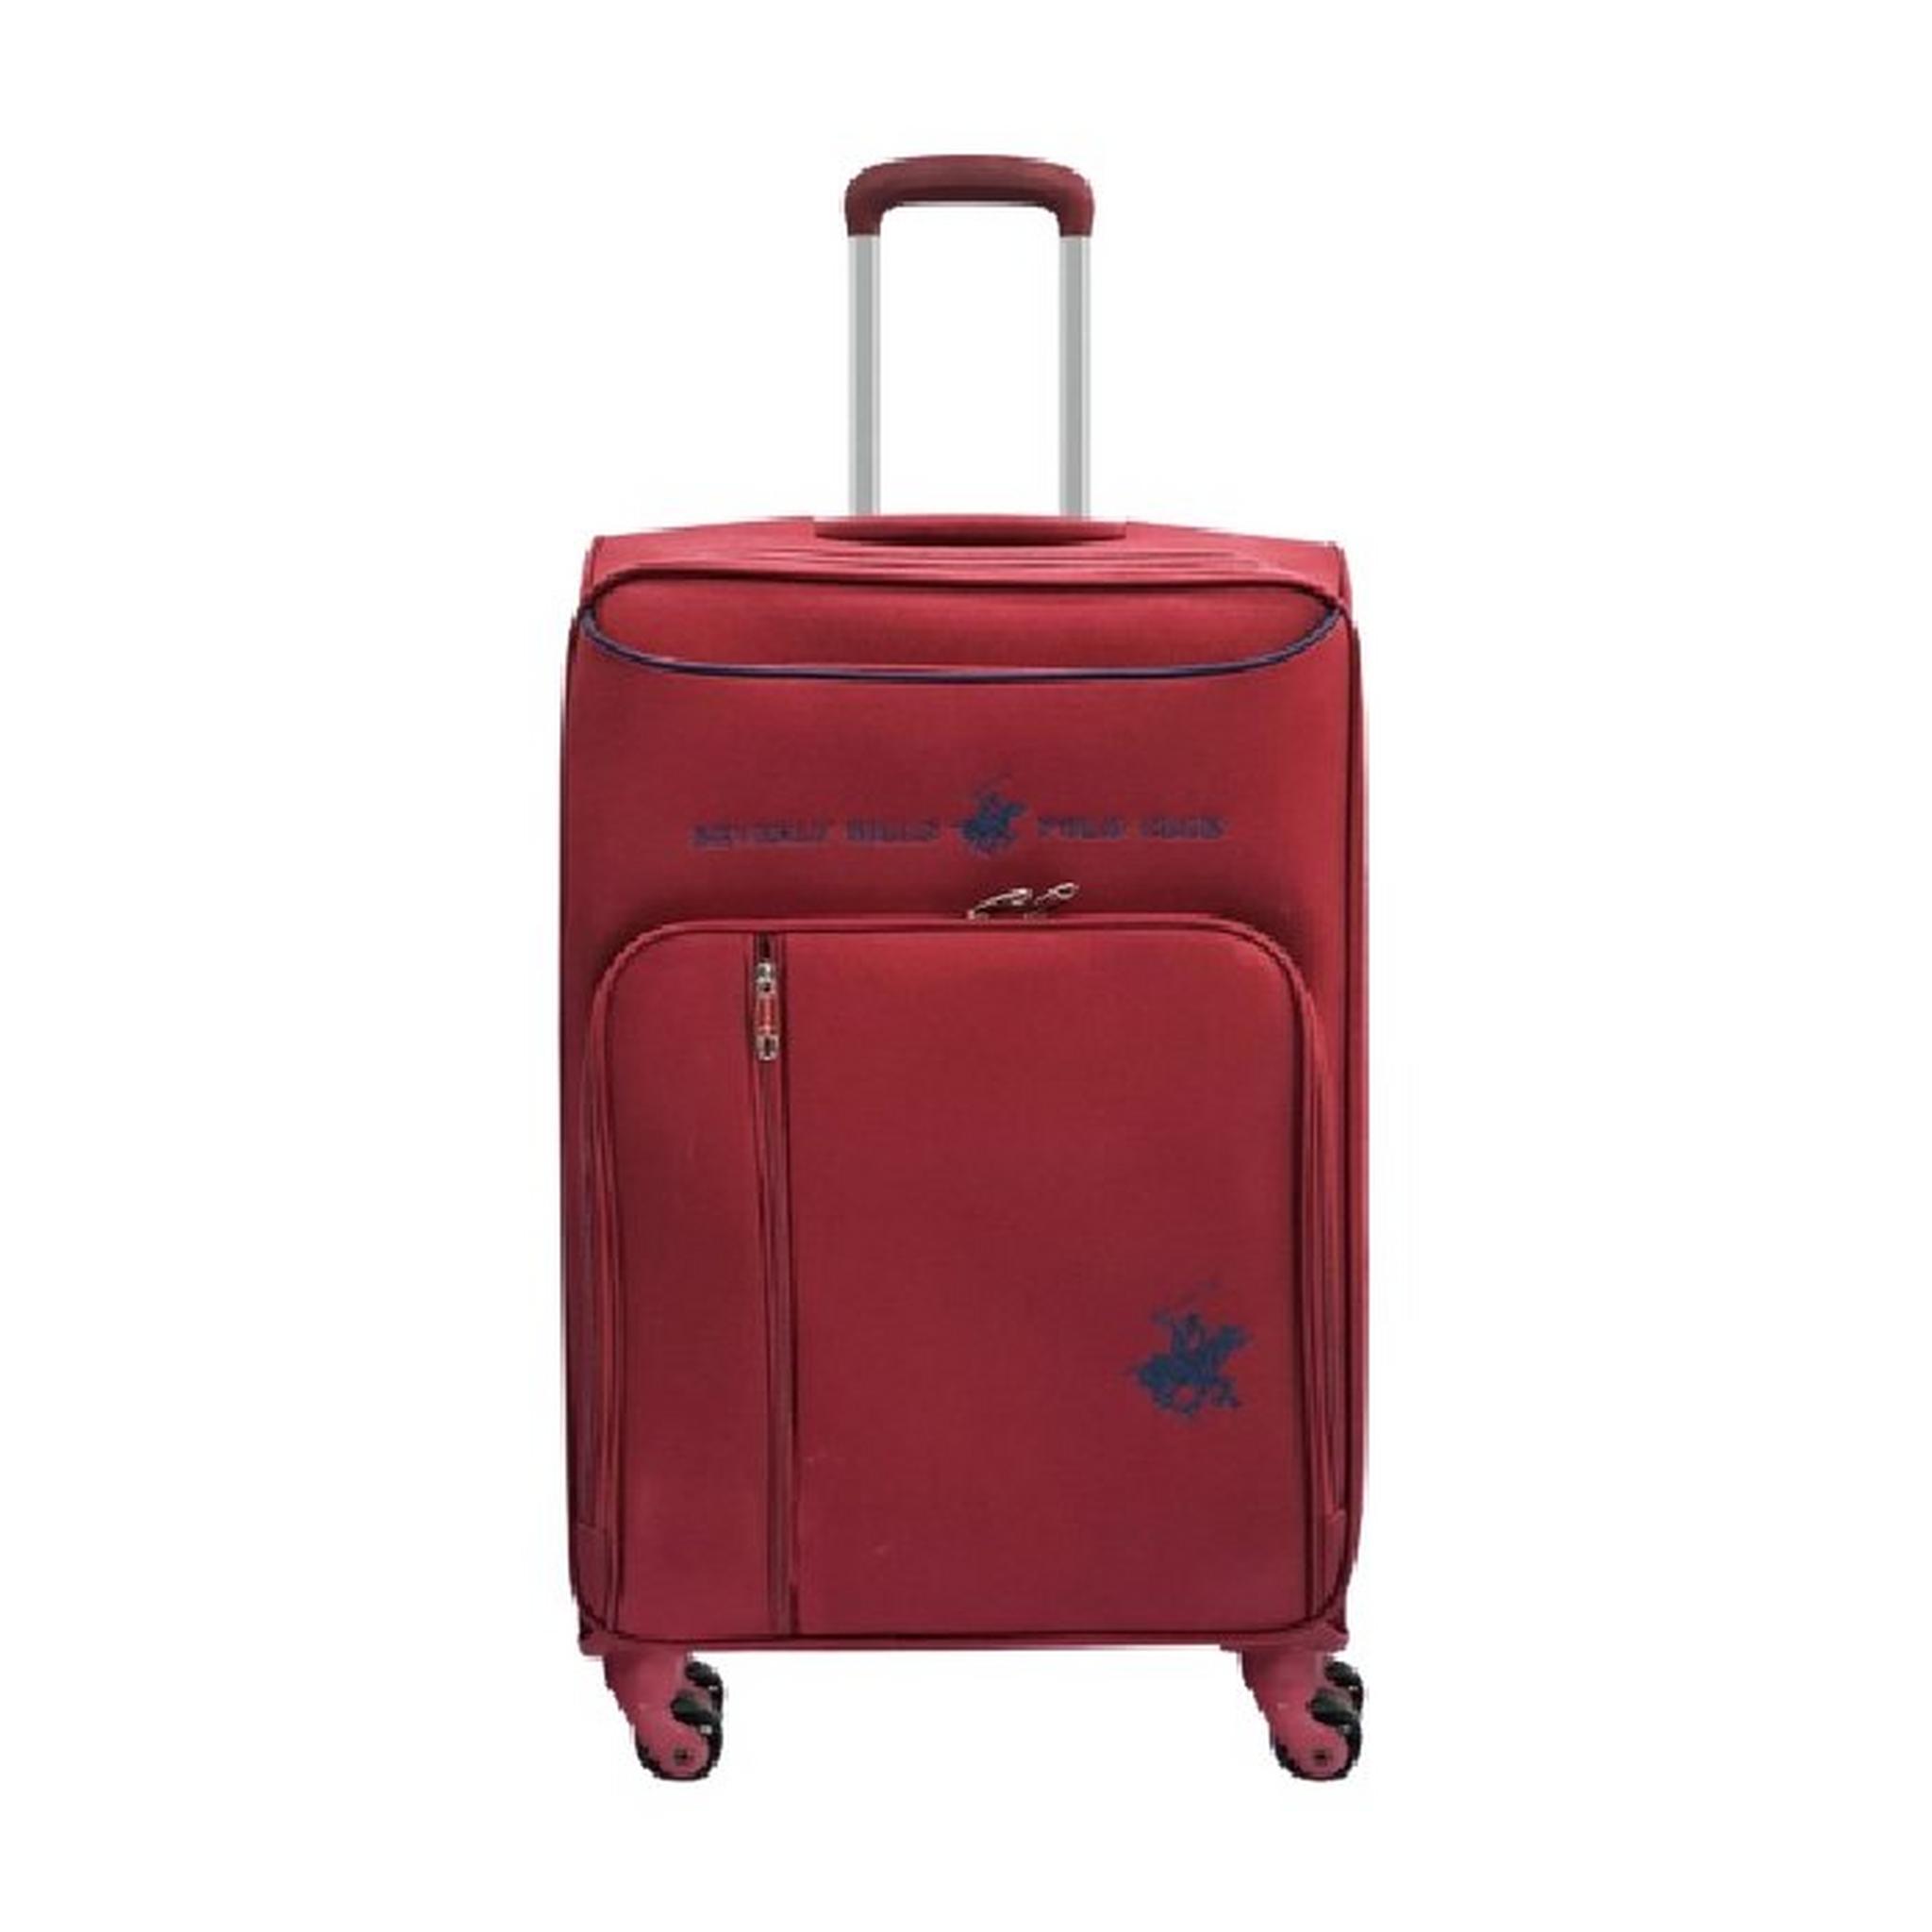 حقيبة السفر يو اس بولو جيراردو حجم اكس لارج - أحمر